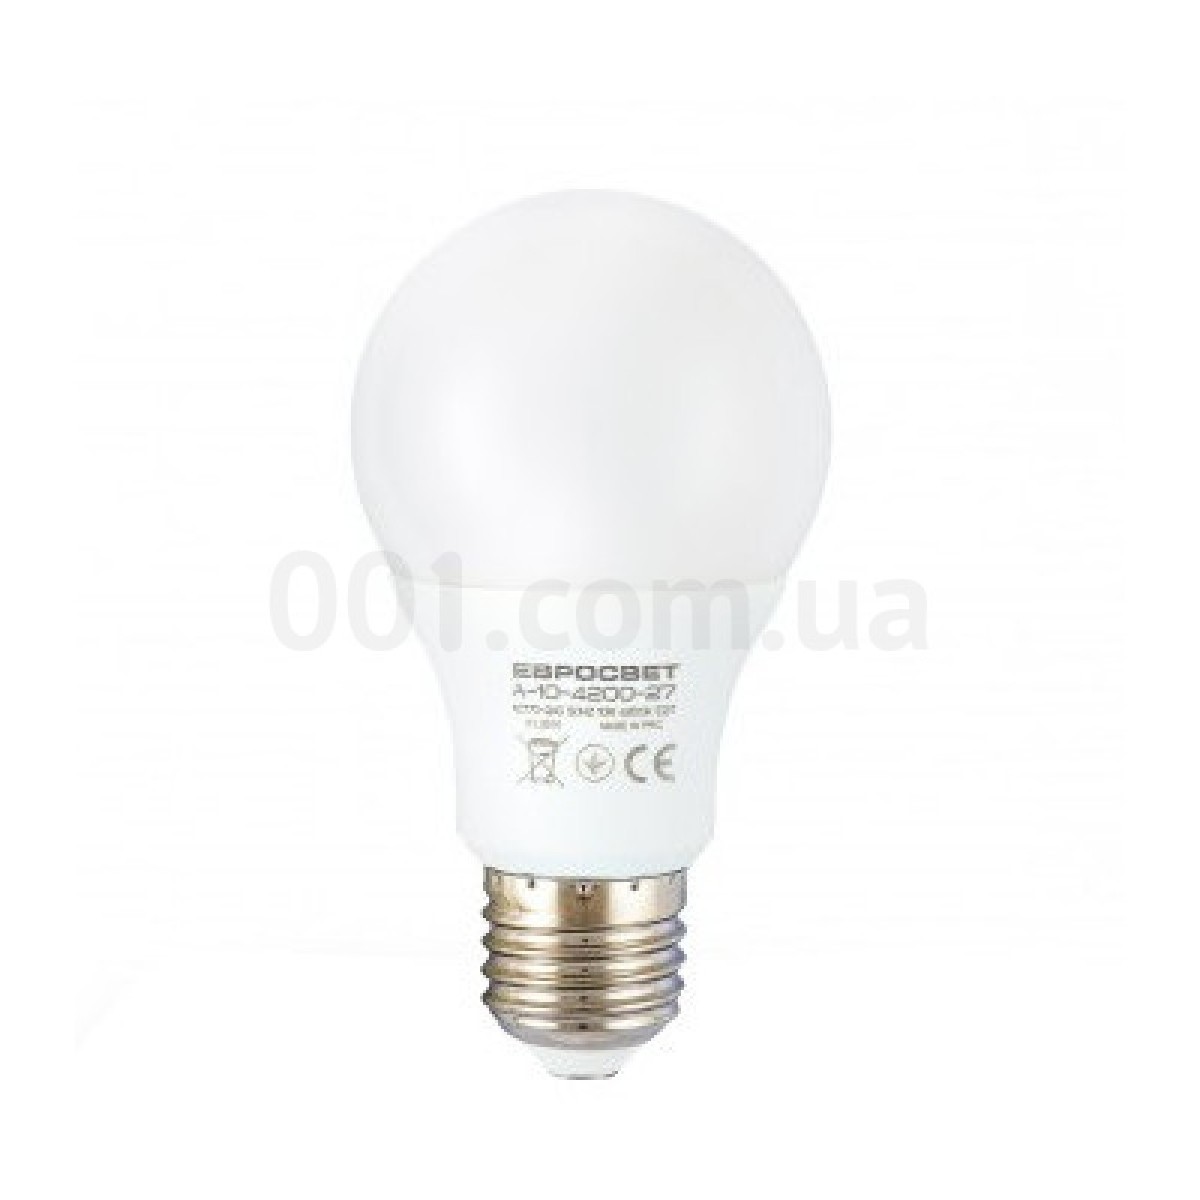 Светодиодная (LED) лампа A-10-4200-27, 10 Вт 4200K E27, Евросвет 256_256.jpg